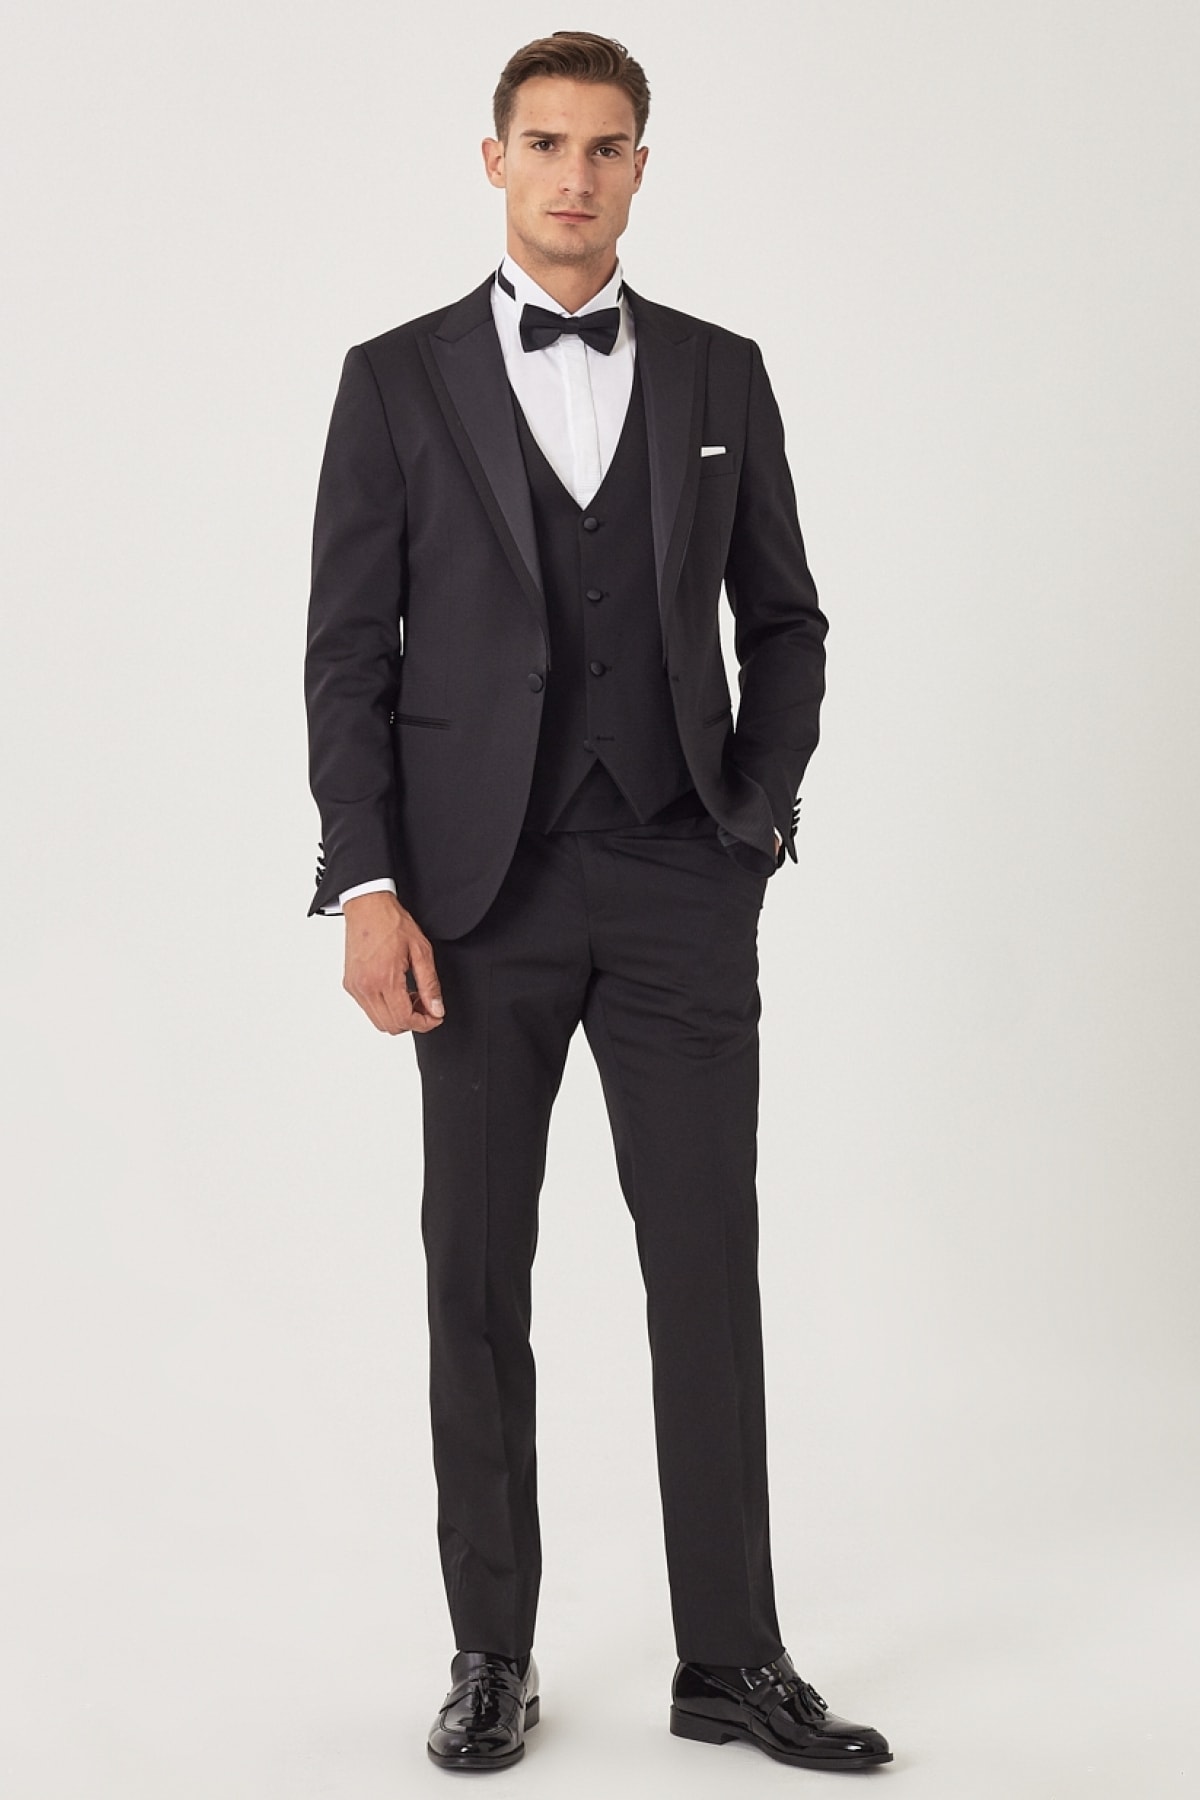 ALTINYILDIZ CLASSICS Men's Black Slim Fit Slim Fit Swallowtail Collar Patterned Vest Tuxedo Suit. im Sale-altinyildiz classics 1